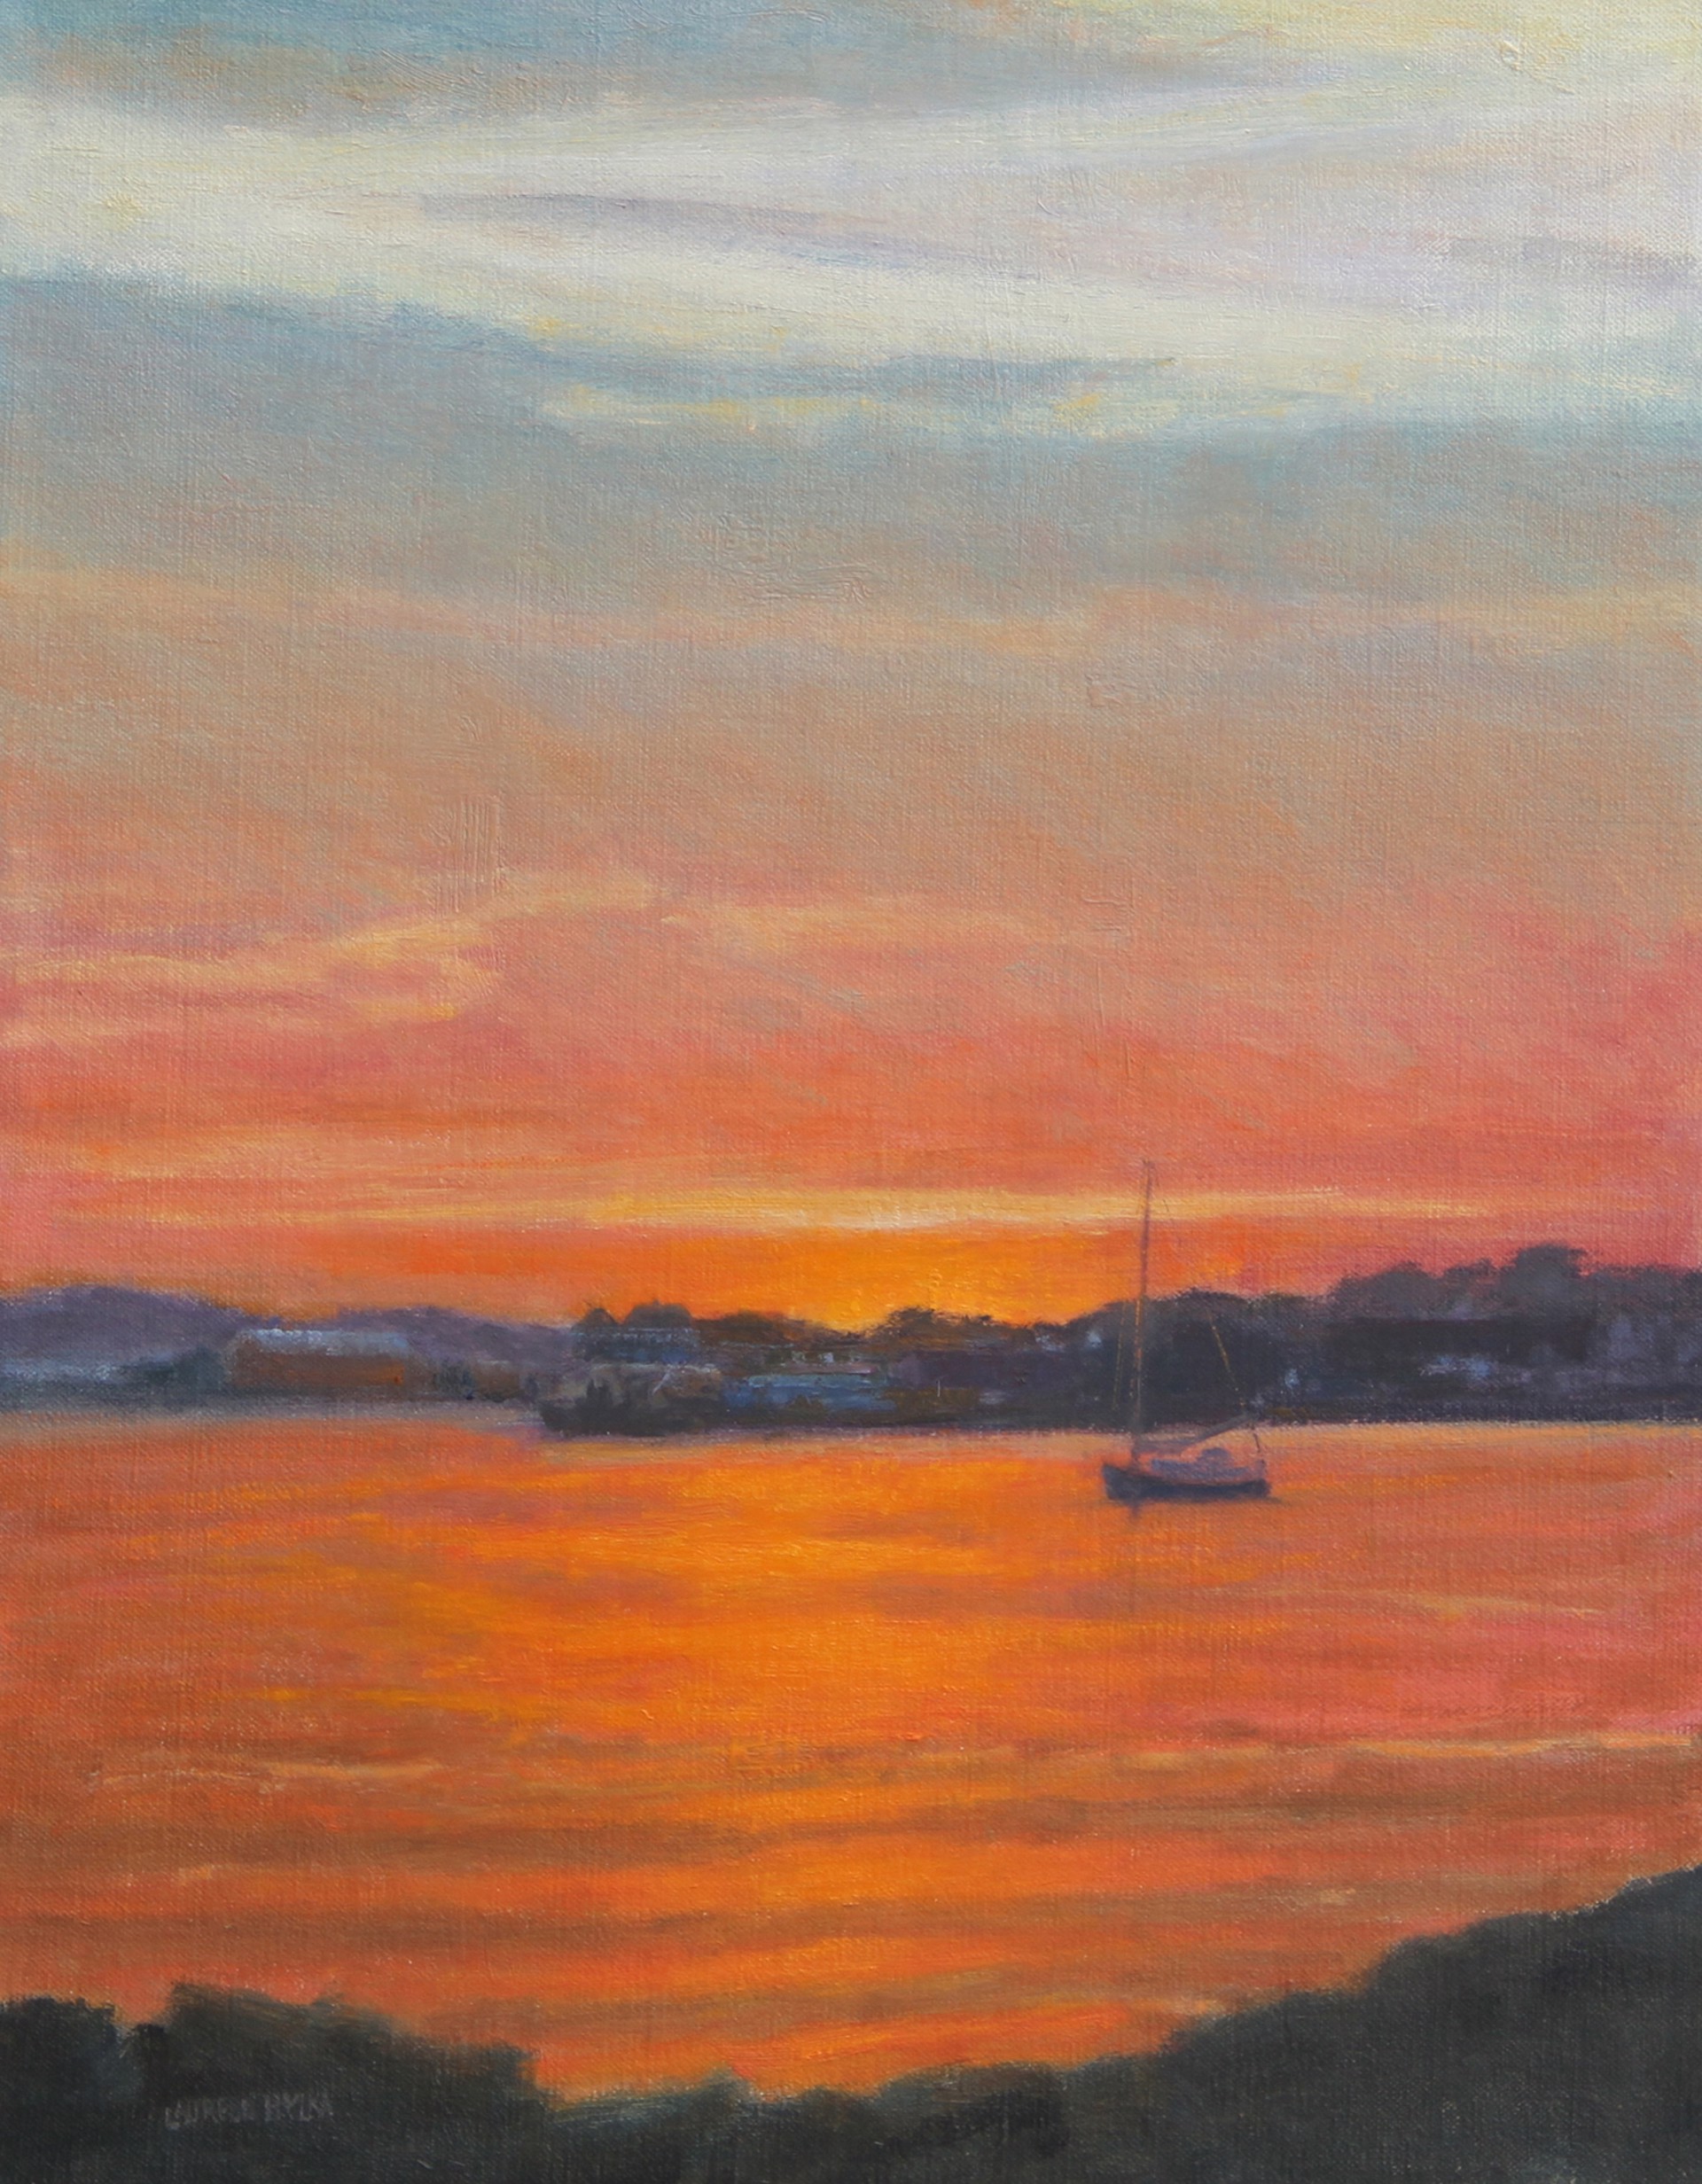 Gloucester Sunset Sail by Laureen Hylka